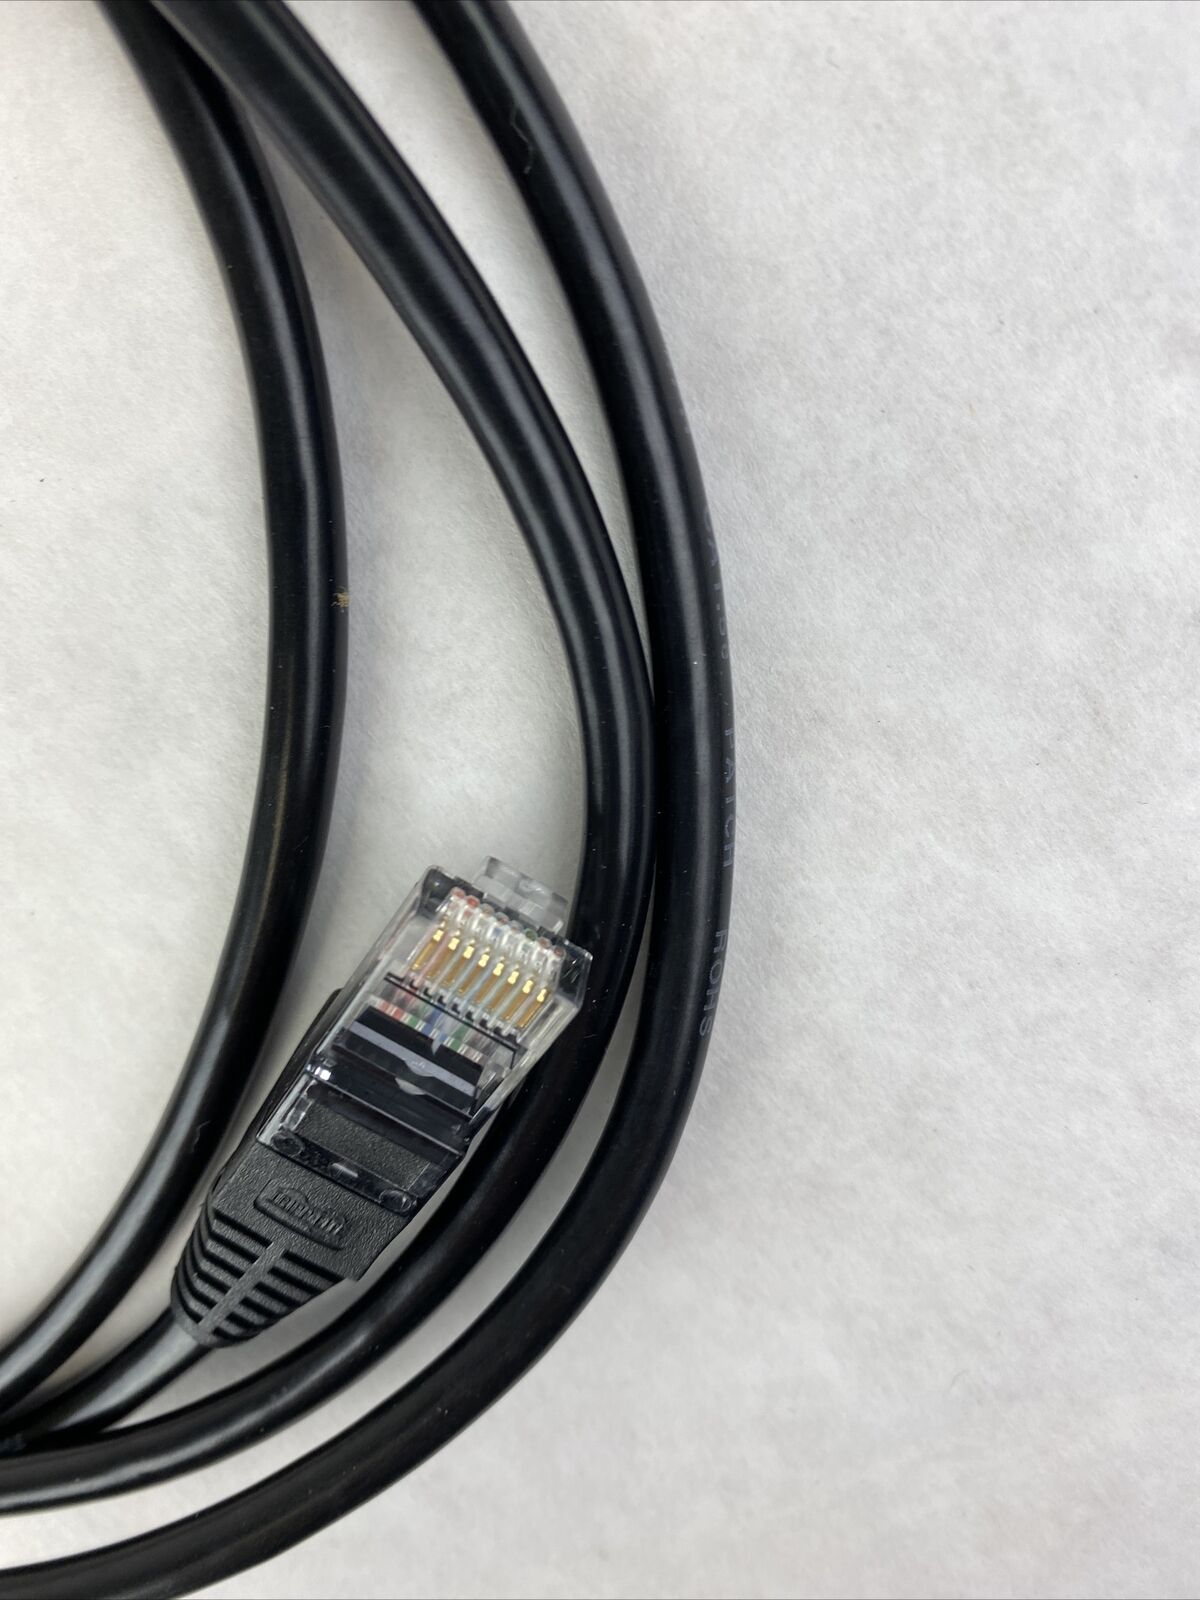 Lot of 5 Tripp Lite N001-005-BK Cat5e 350MHz Snagless cables (RJ45 M/M) 5ft